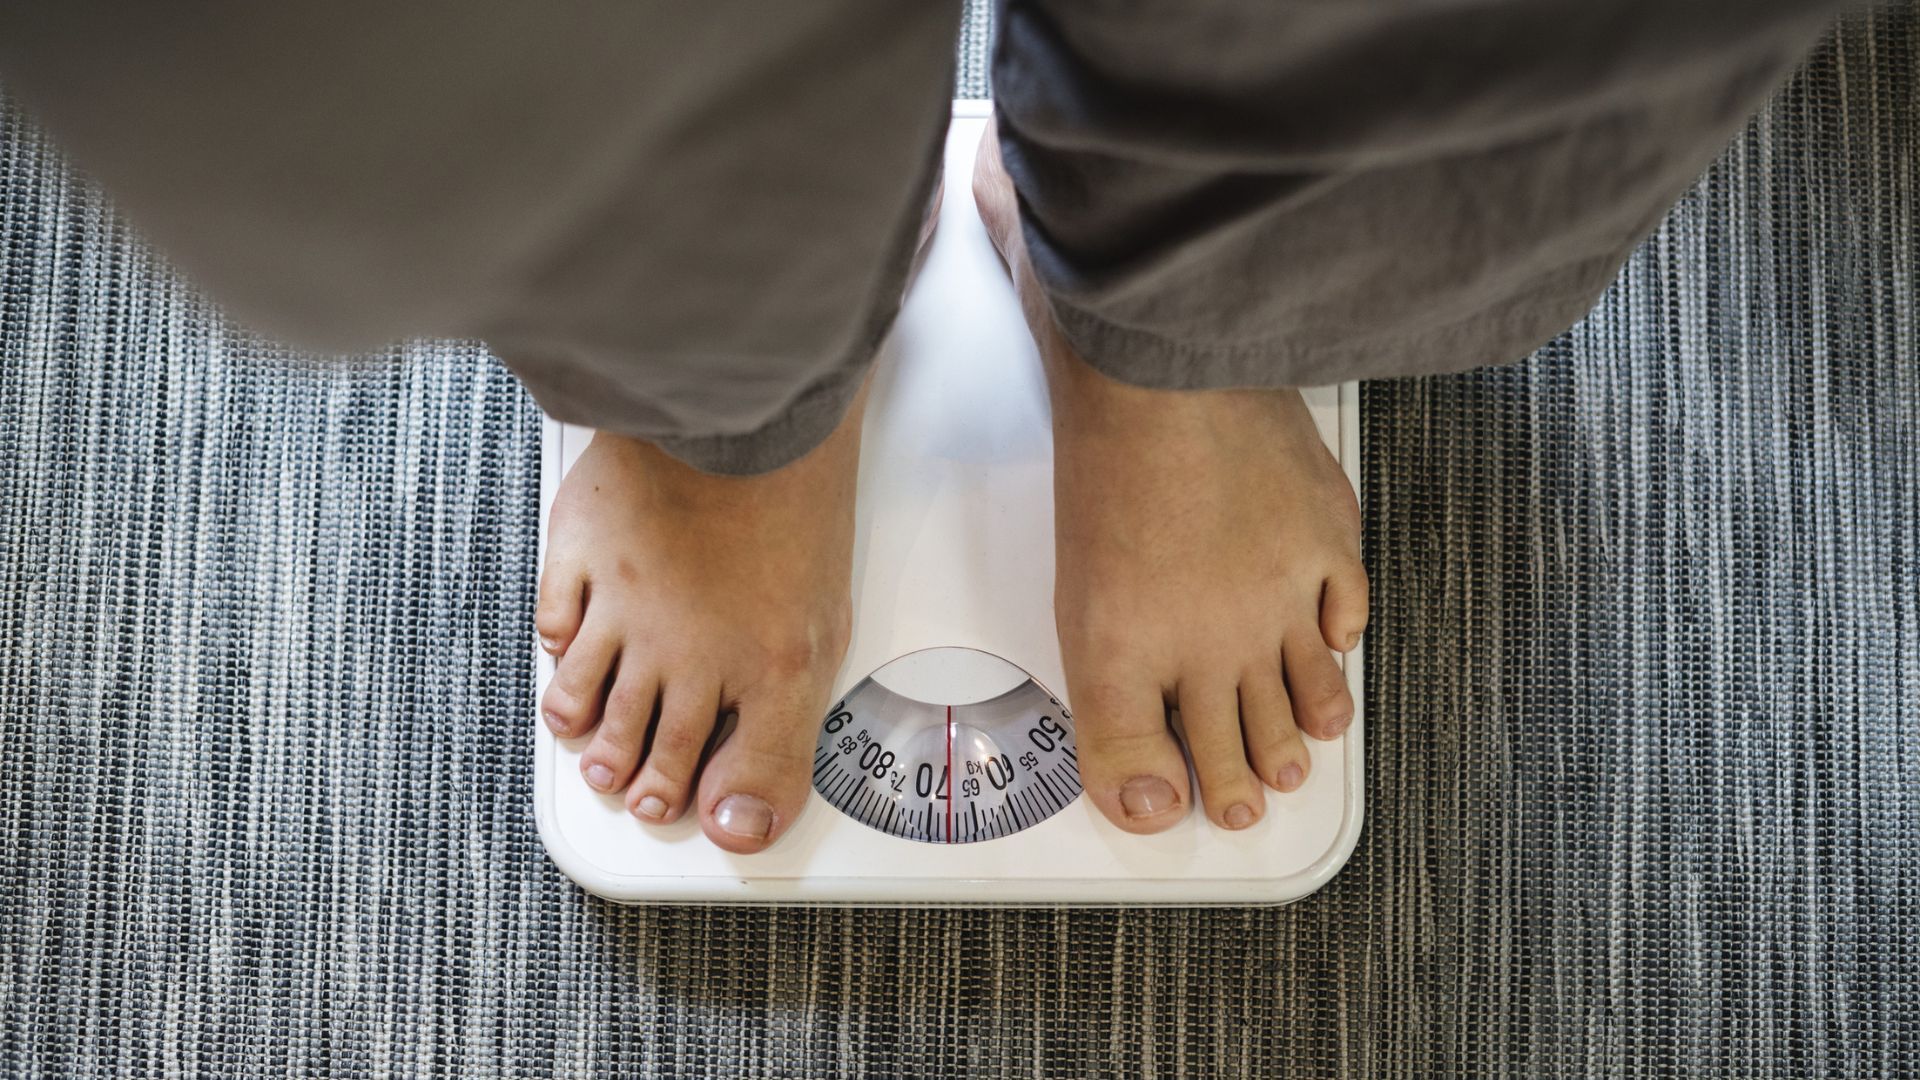 Susah menurunkan berat badan? Cek beberapa faktor yang dapat memengaruhi penurunan berat badan berikut ini./ Freepik/ Raw Pixel